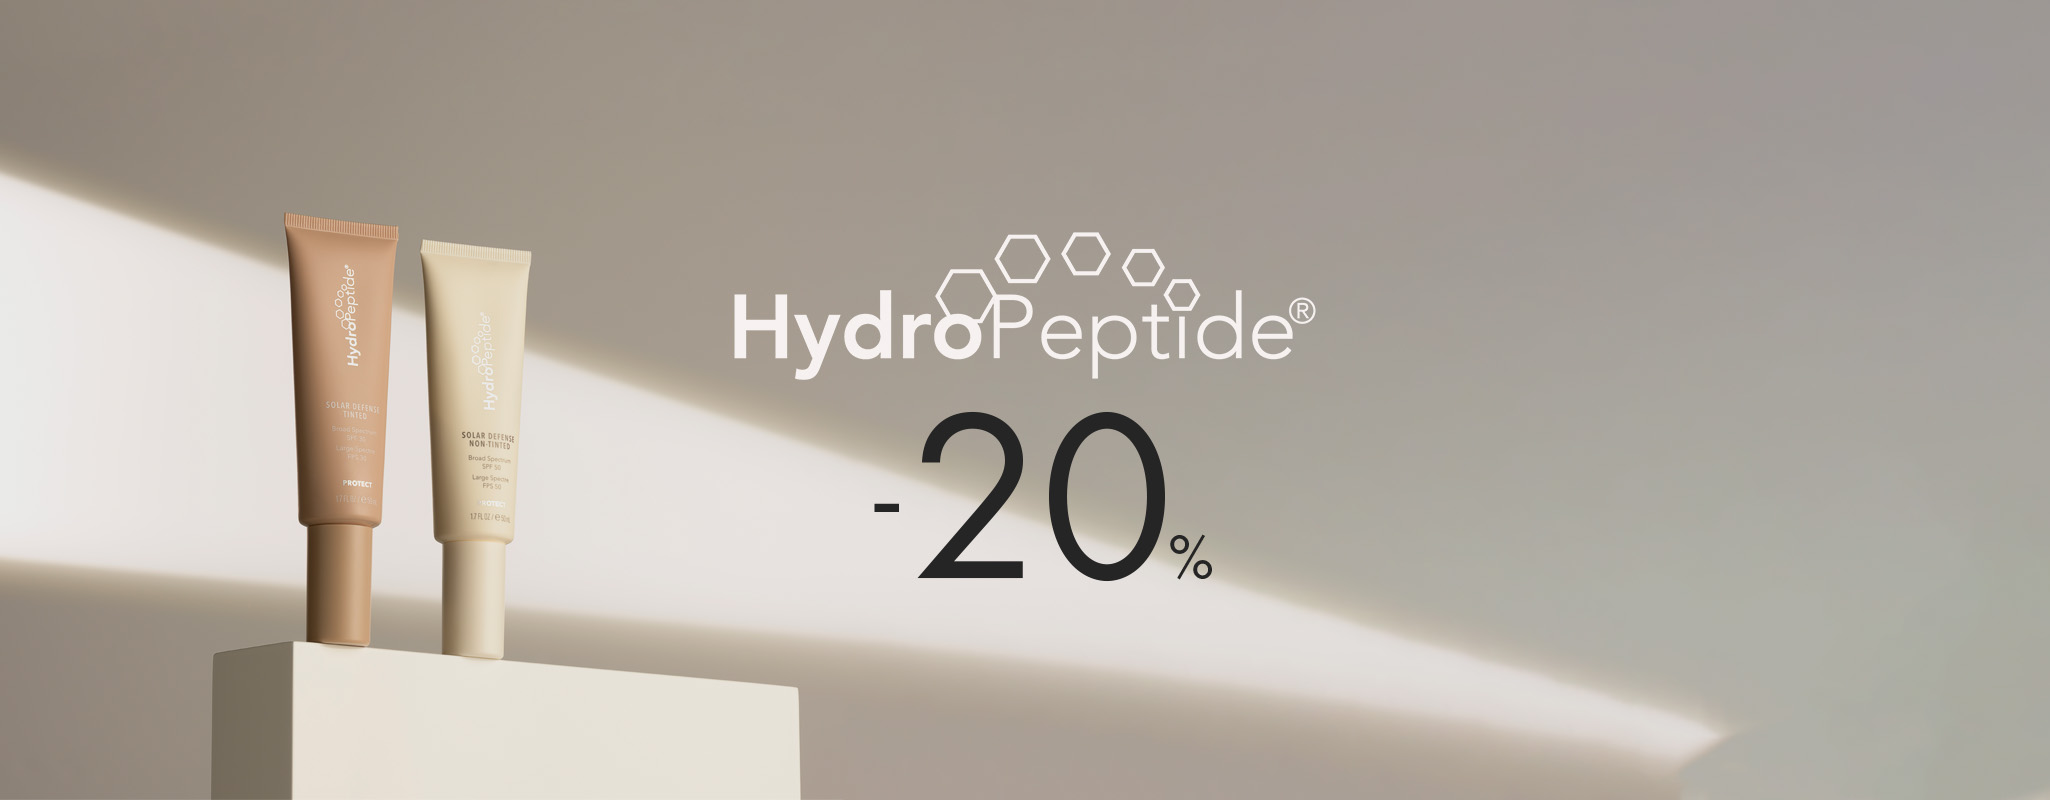 HydroPeptide 20%!